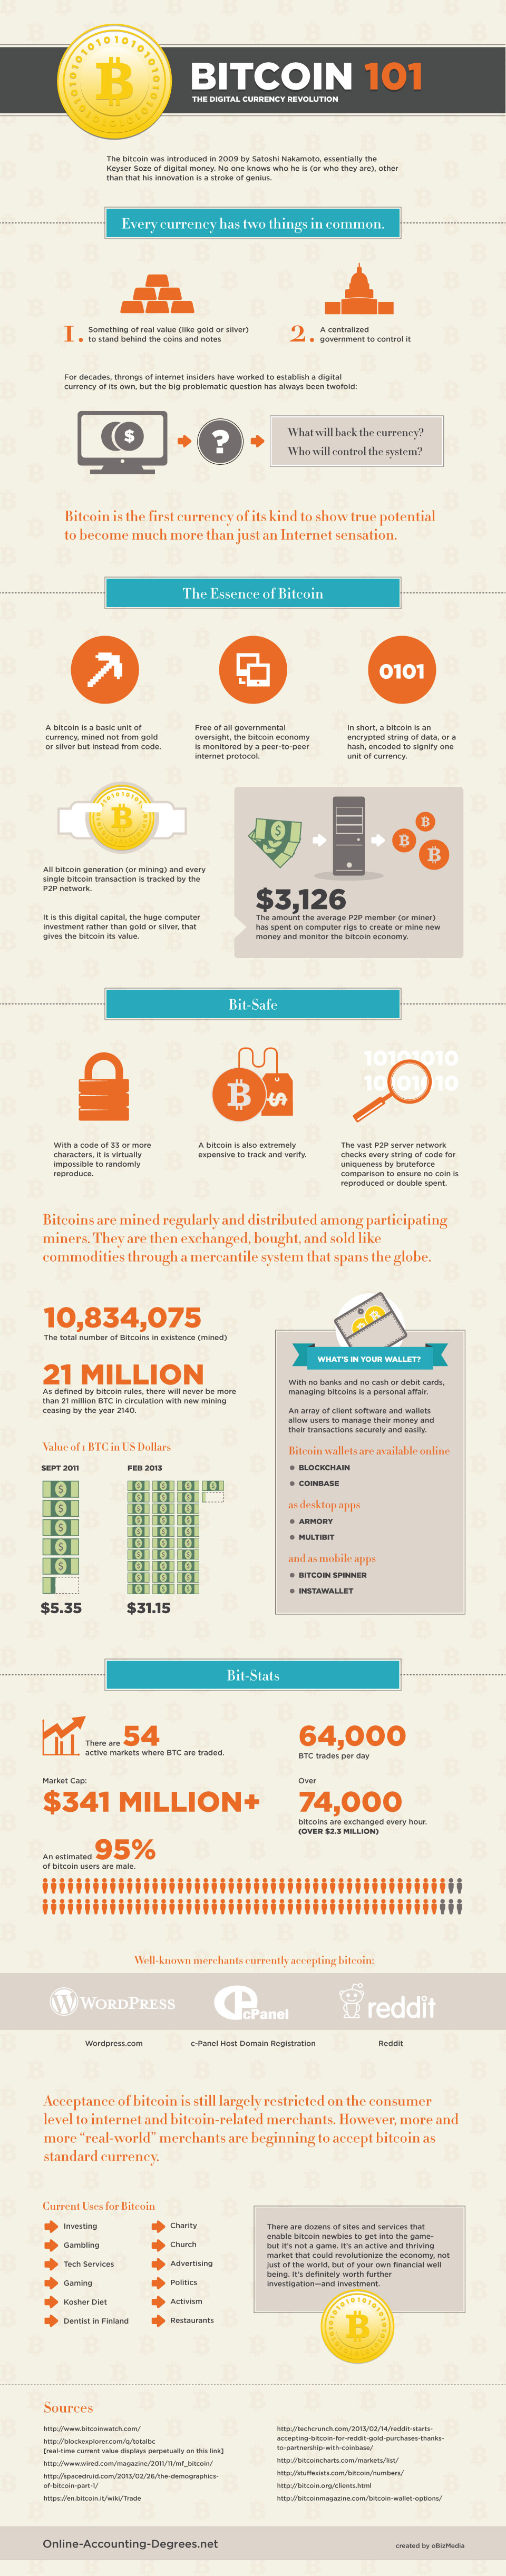 Technological Advances - Bitcoin infographic